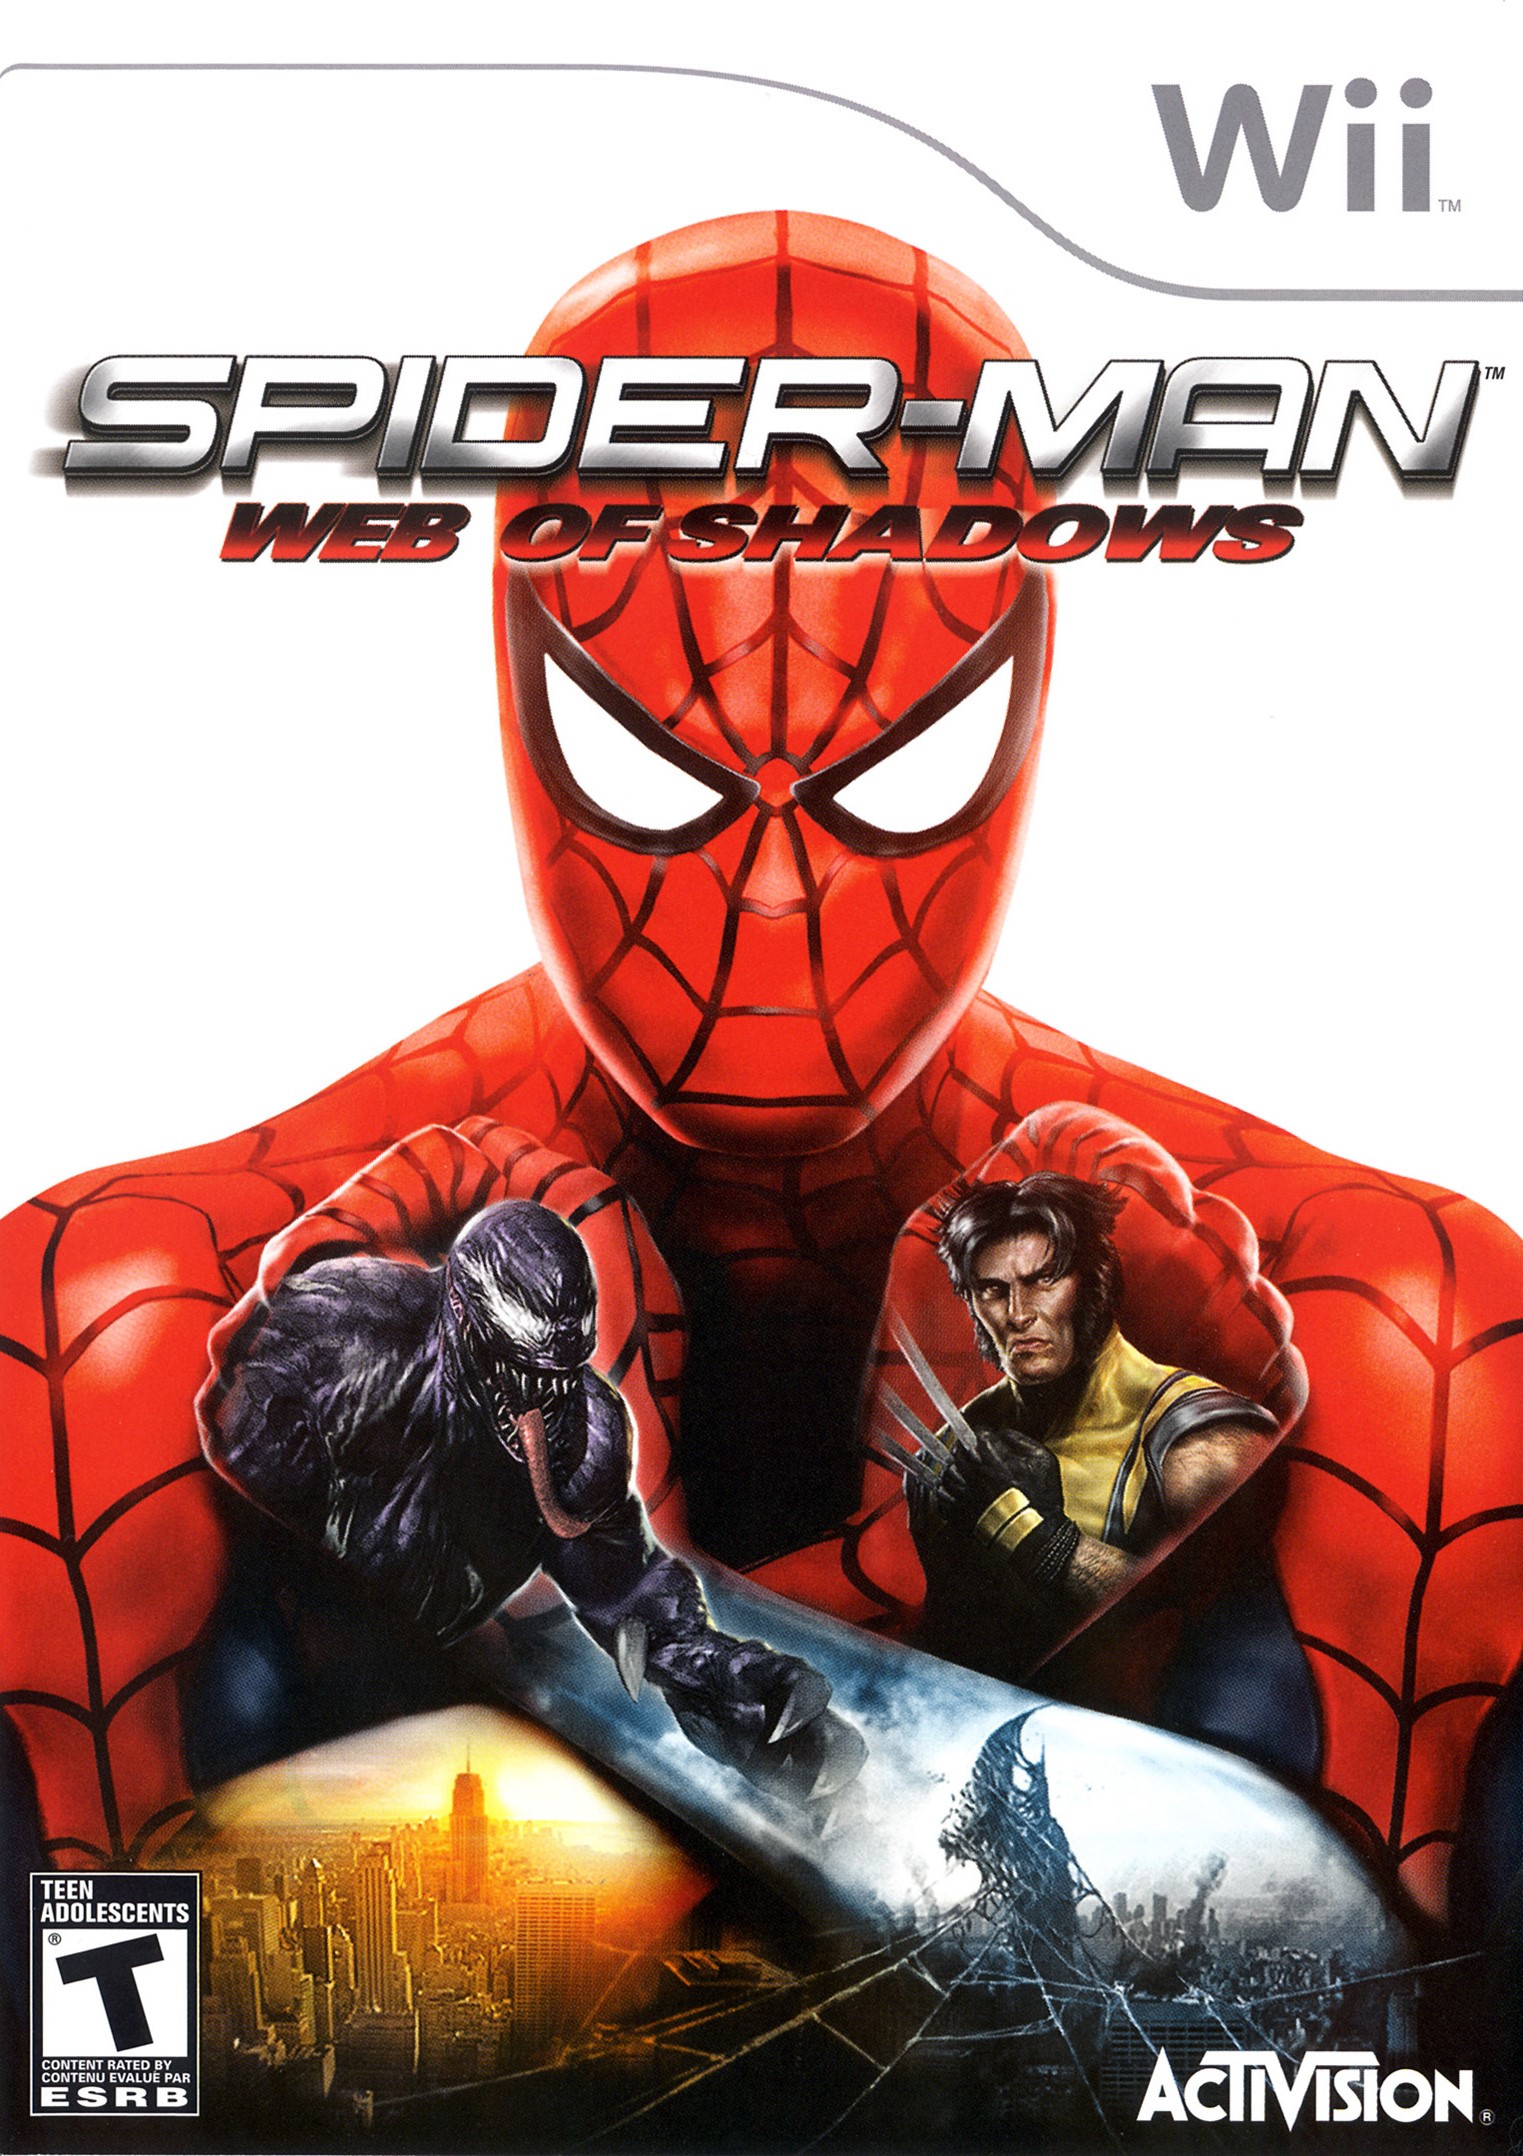 'Spiderman: Web of Shadows'